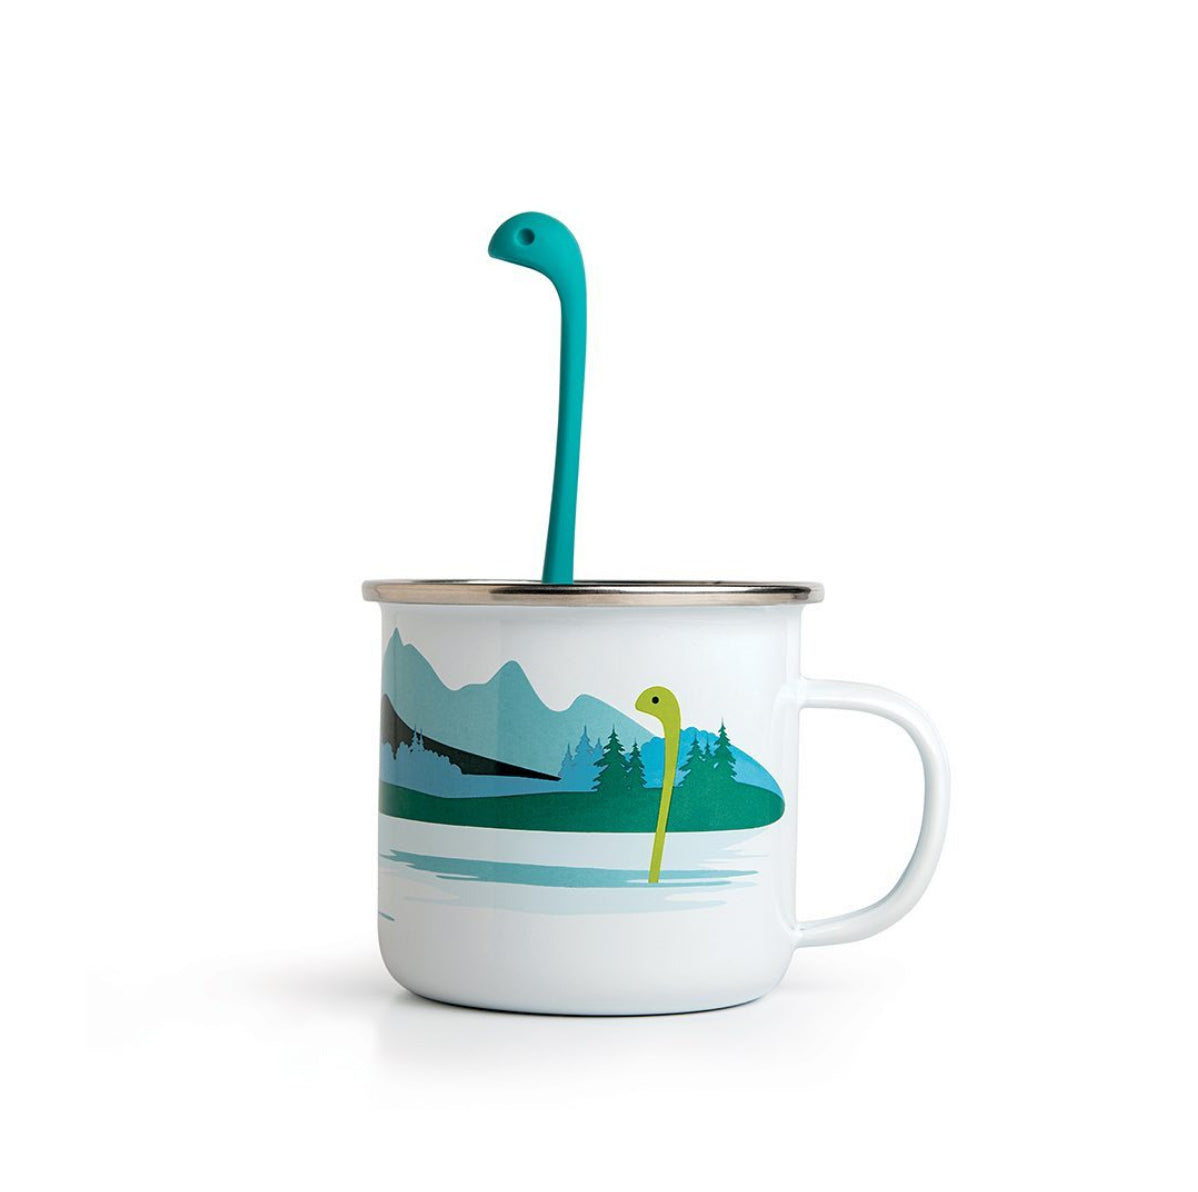 cup-of-nessie-tea-infuser-cup3.jpg